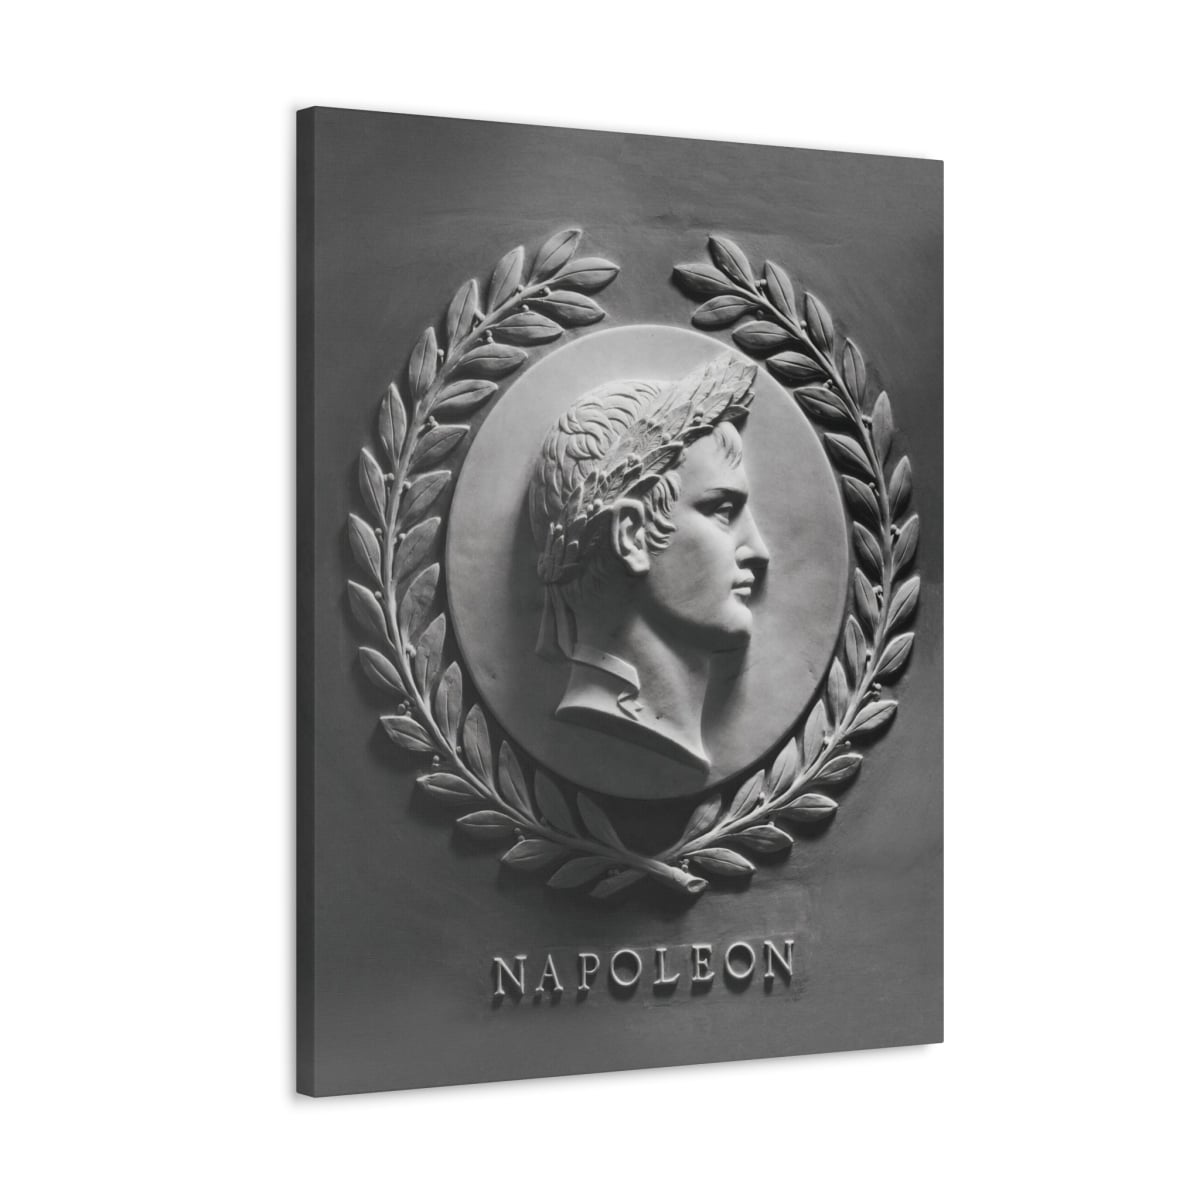 Explore the Majesty of Napoleon: Stone Sculpture Gallery Wrap